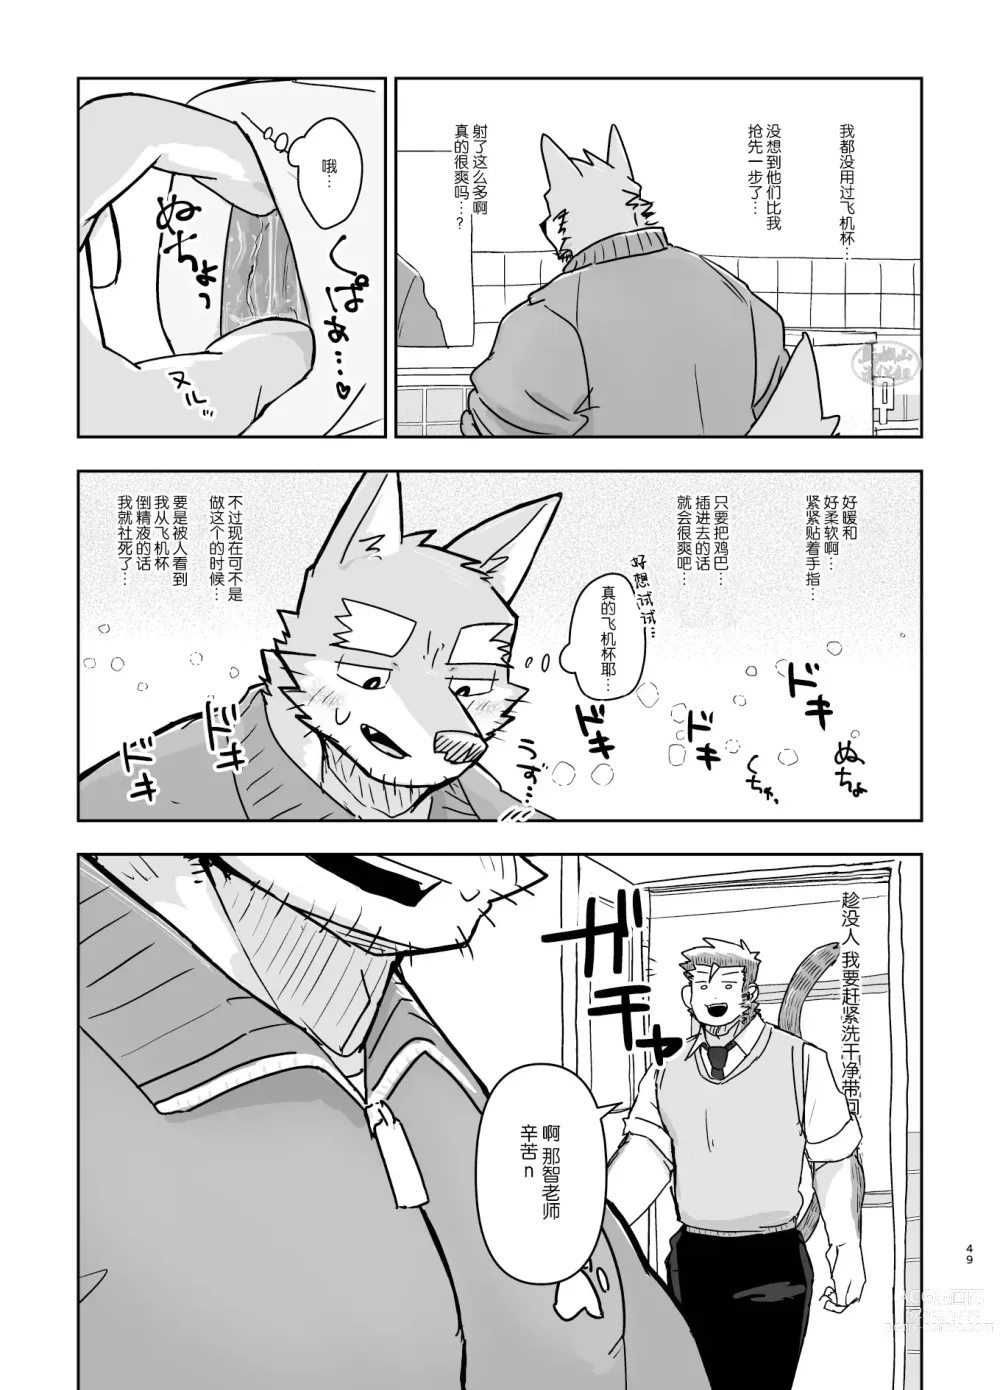 Page 49 of doujinshi 关于我在教室被榨精这件事